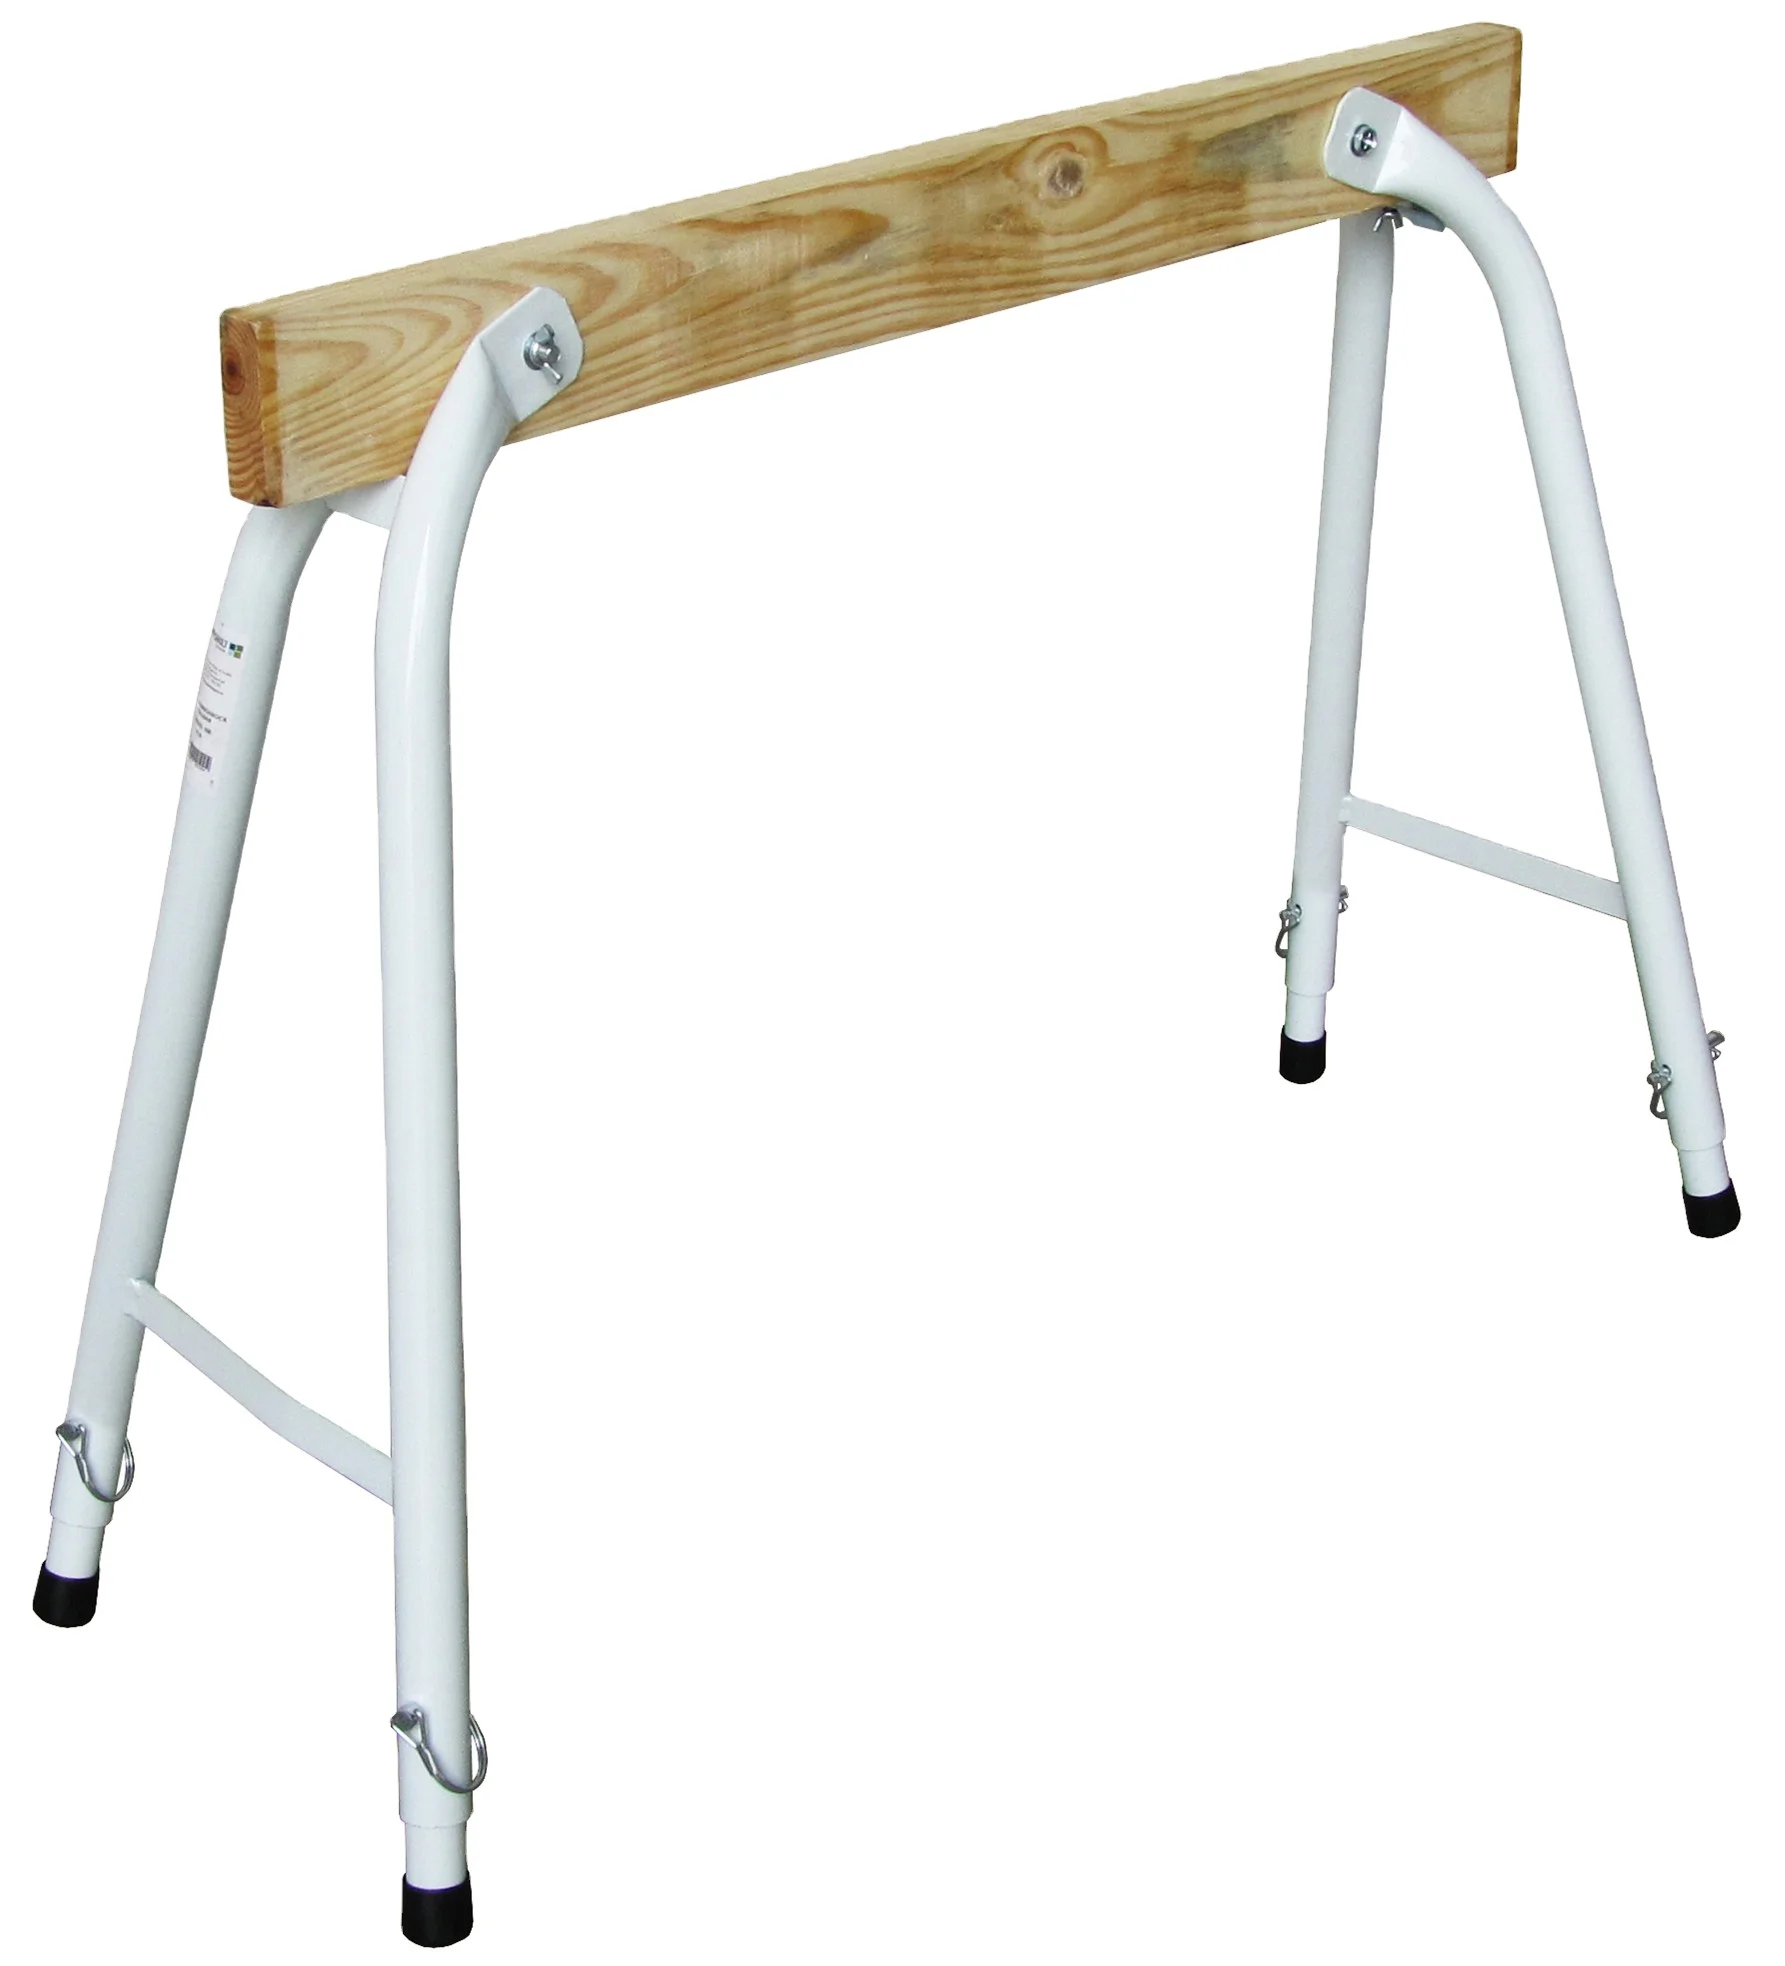 DX-9002 wood  steel platform Wood bench for sawing  set wood metal saw horse